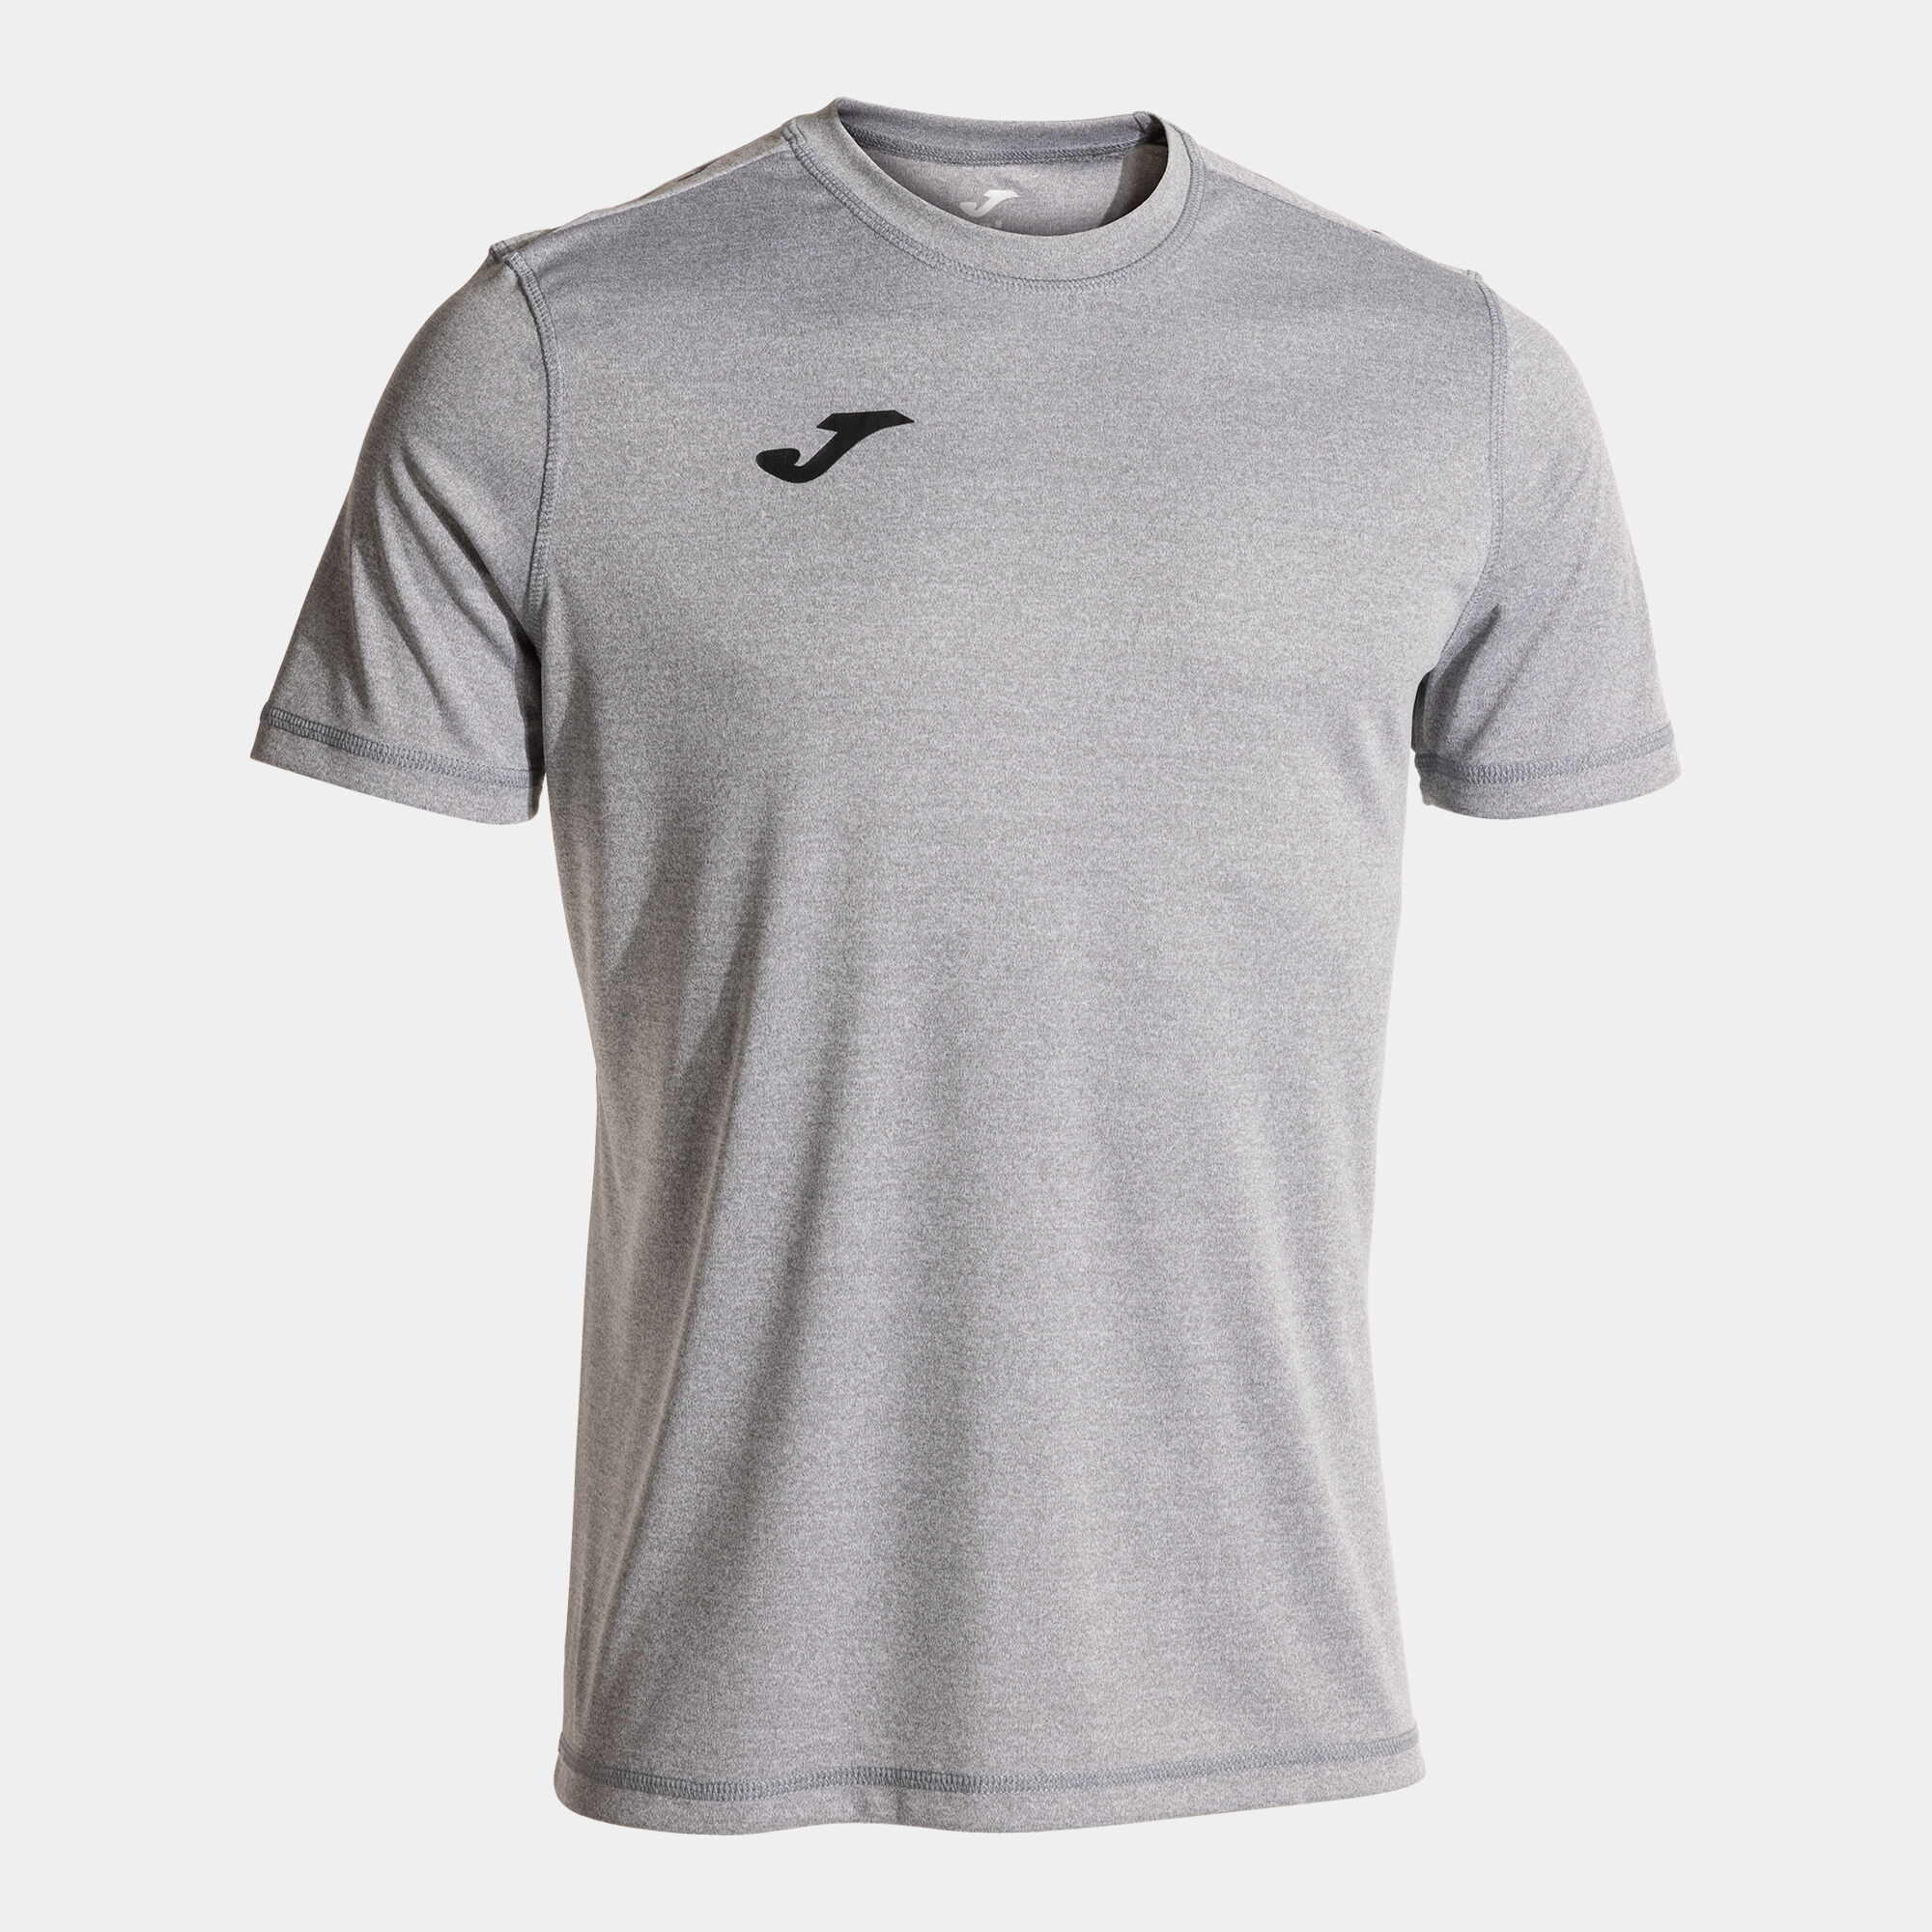 Camiseta manga corta hombre Olimpiada handball gris melange negro